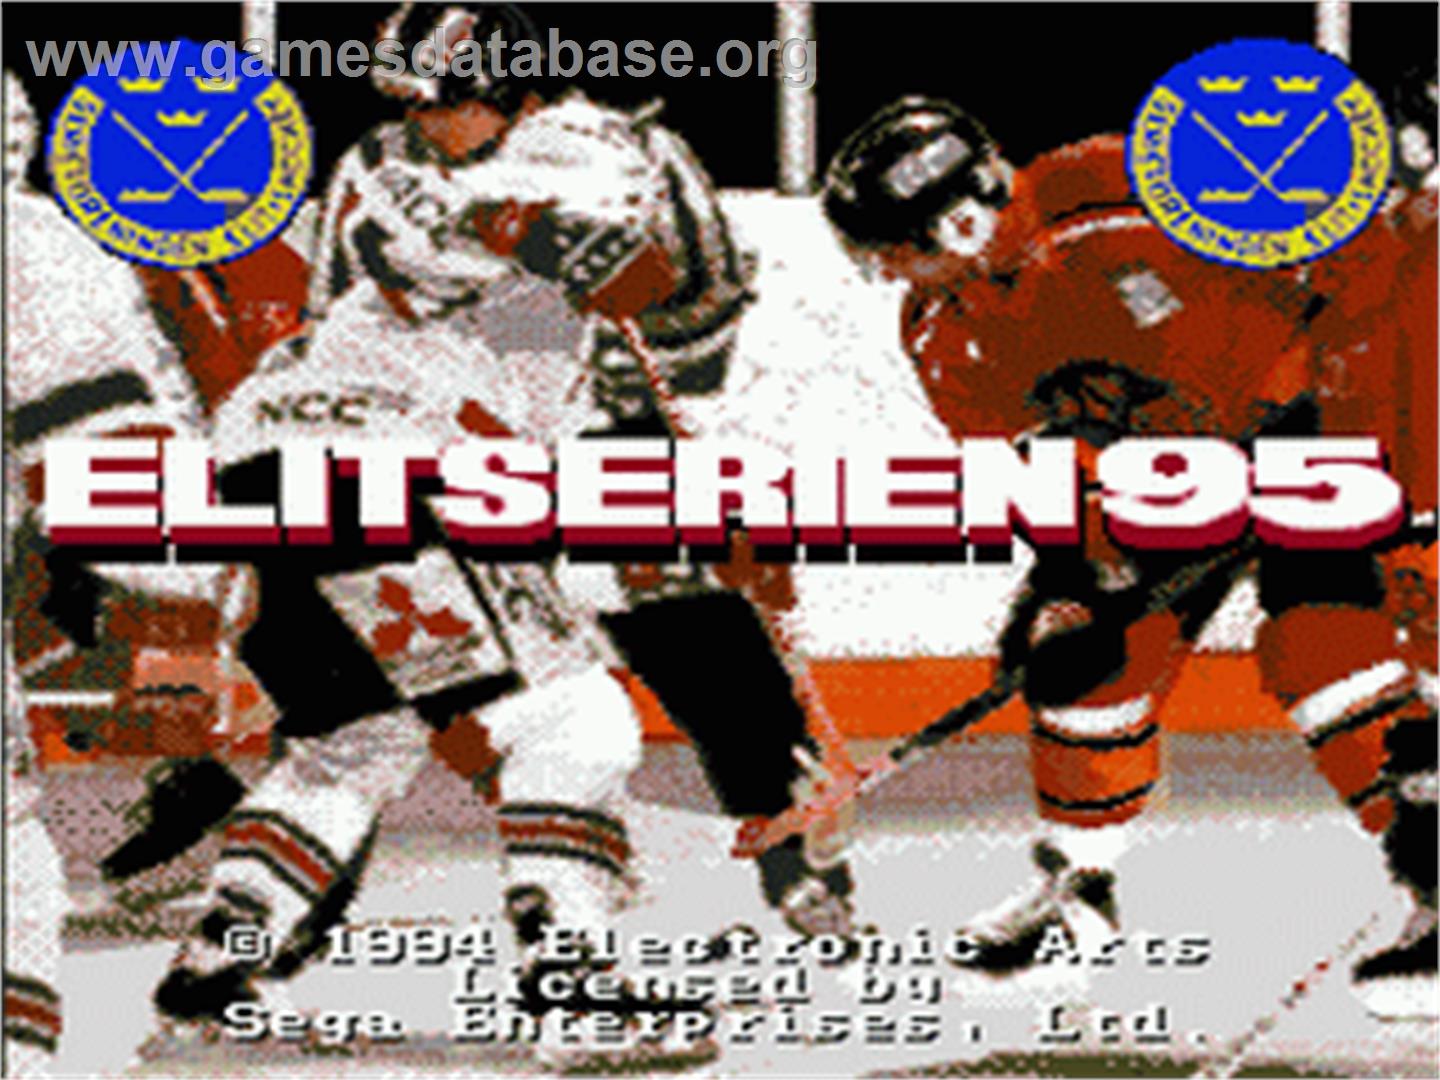 Elitserien 95 - Sega Genesis - Artwork - Title Screen